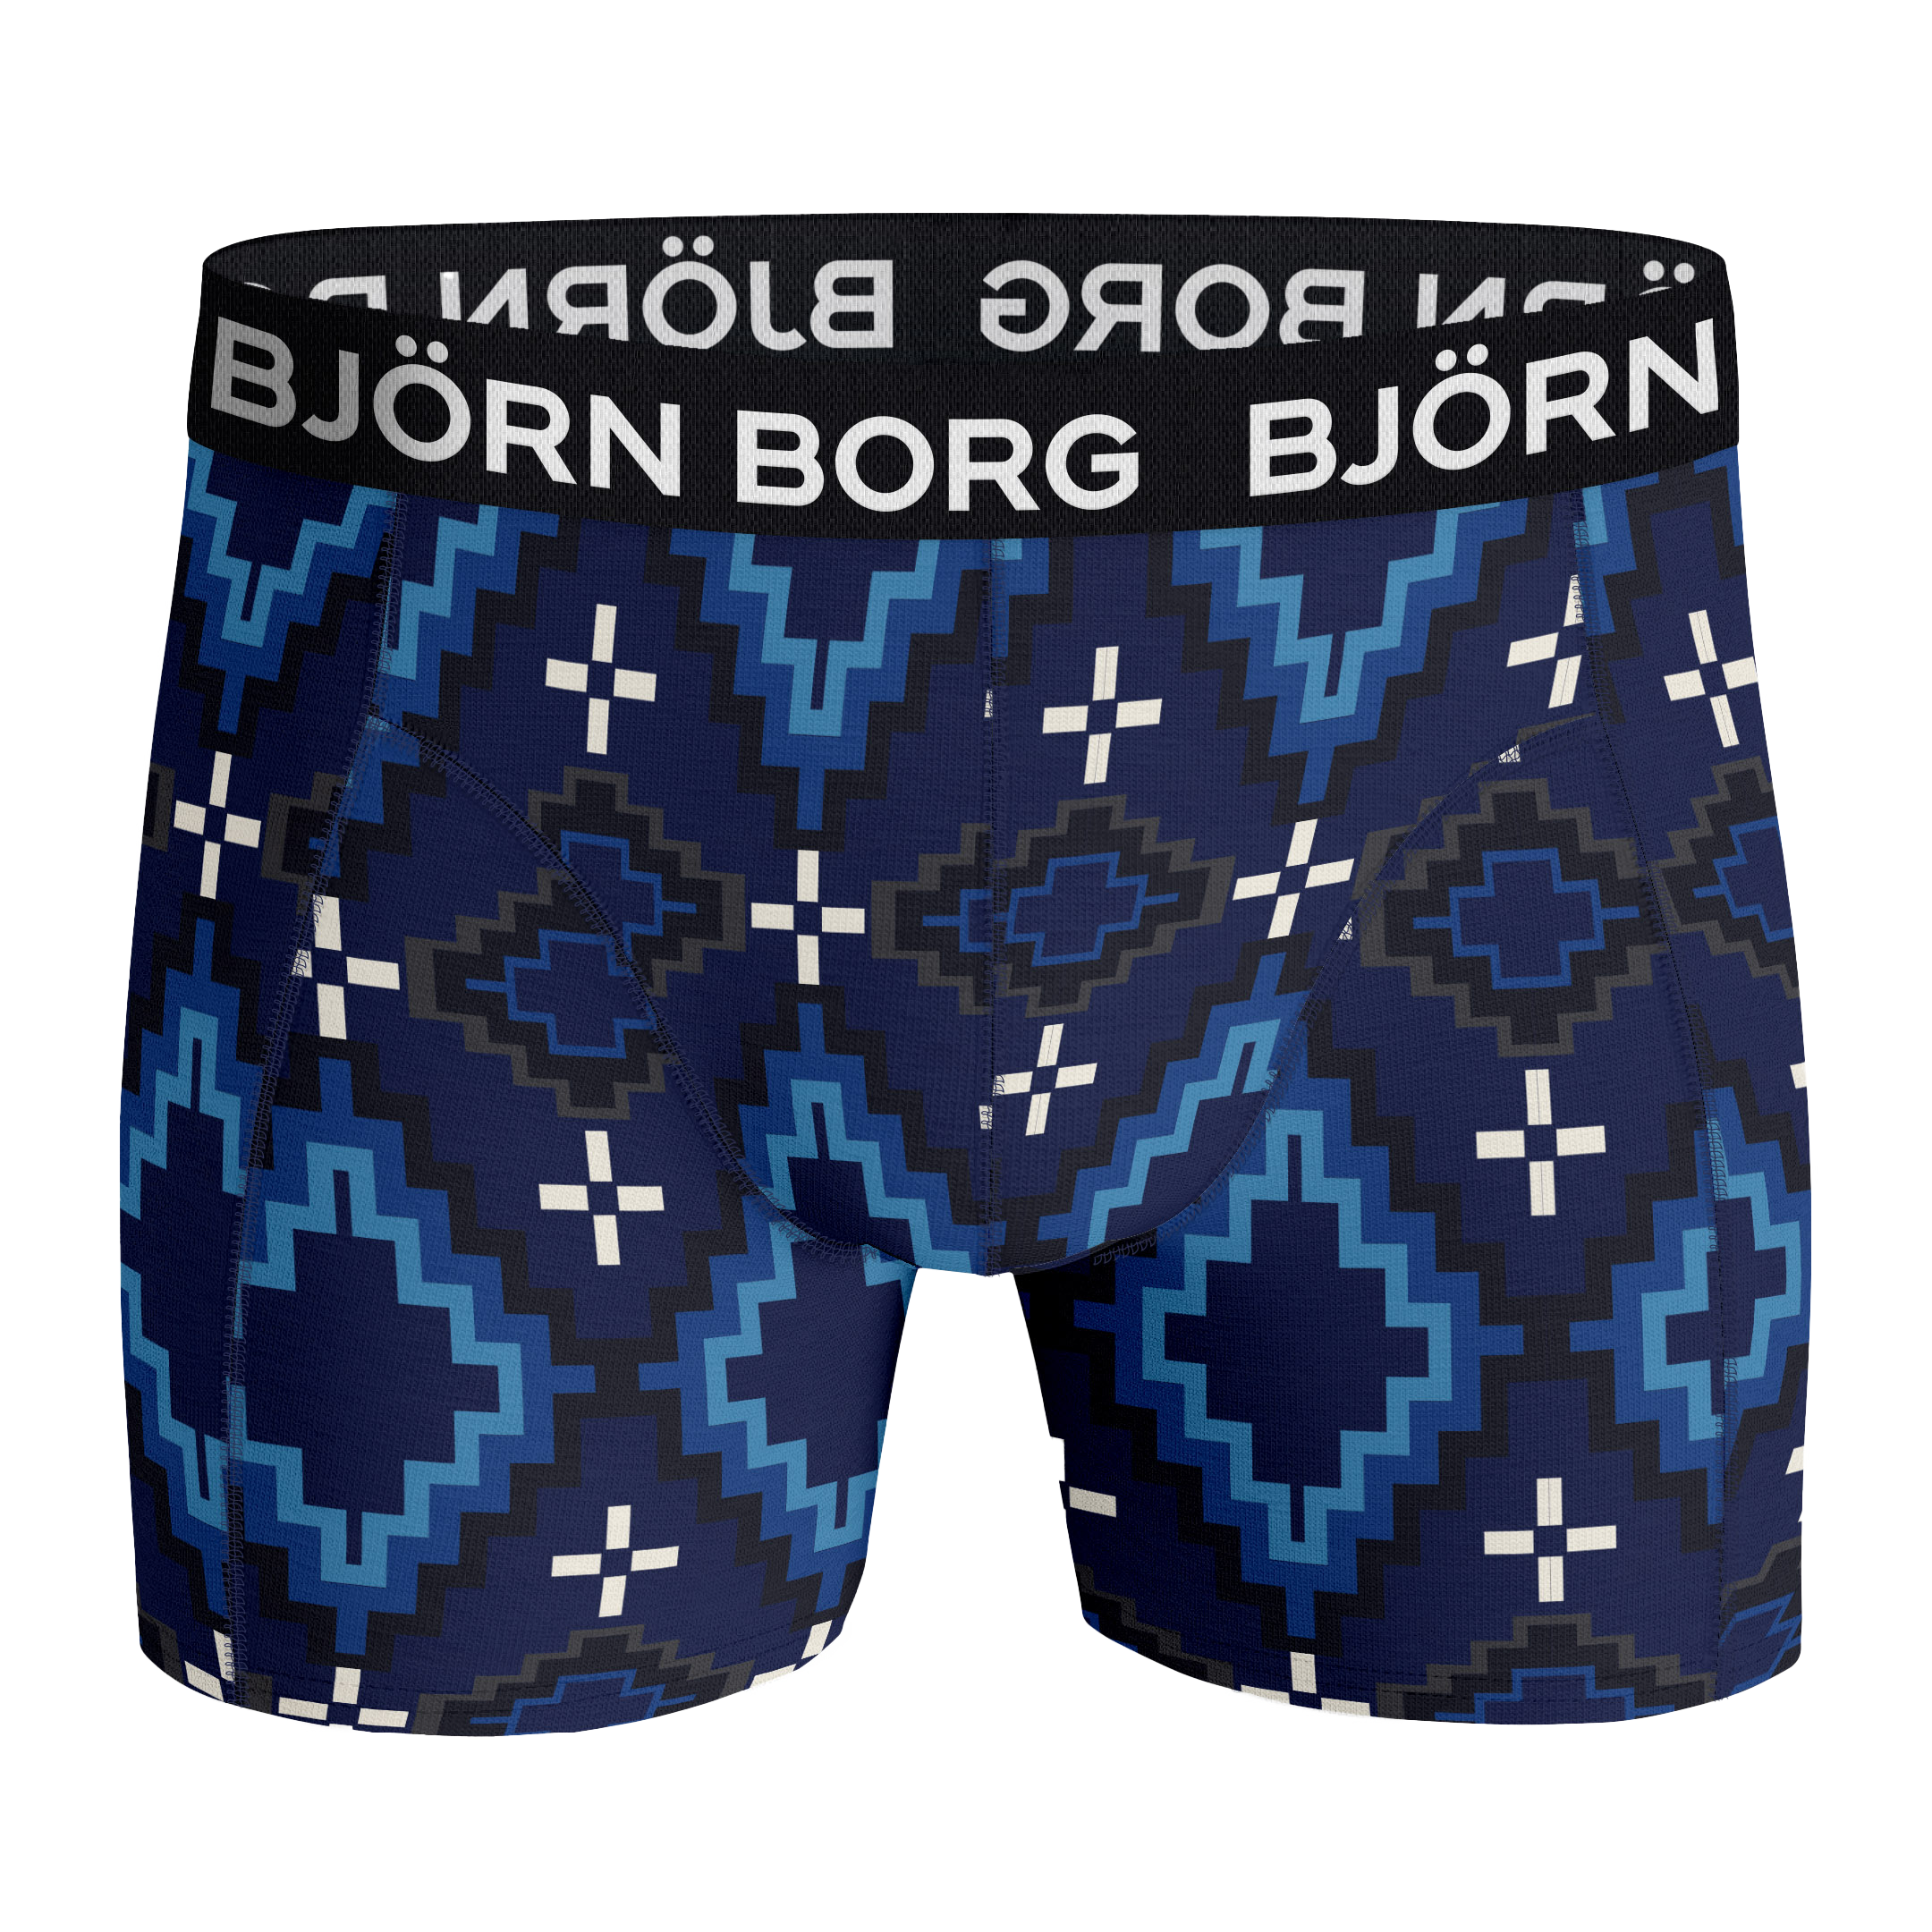 Mens Bjorn Borg Briefs Underpants Size Medium BNWT Free post to the UK 